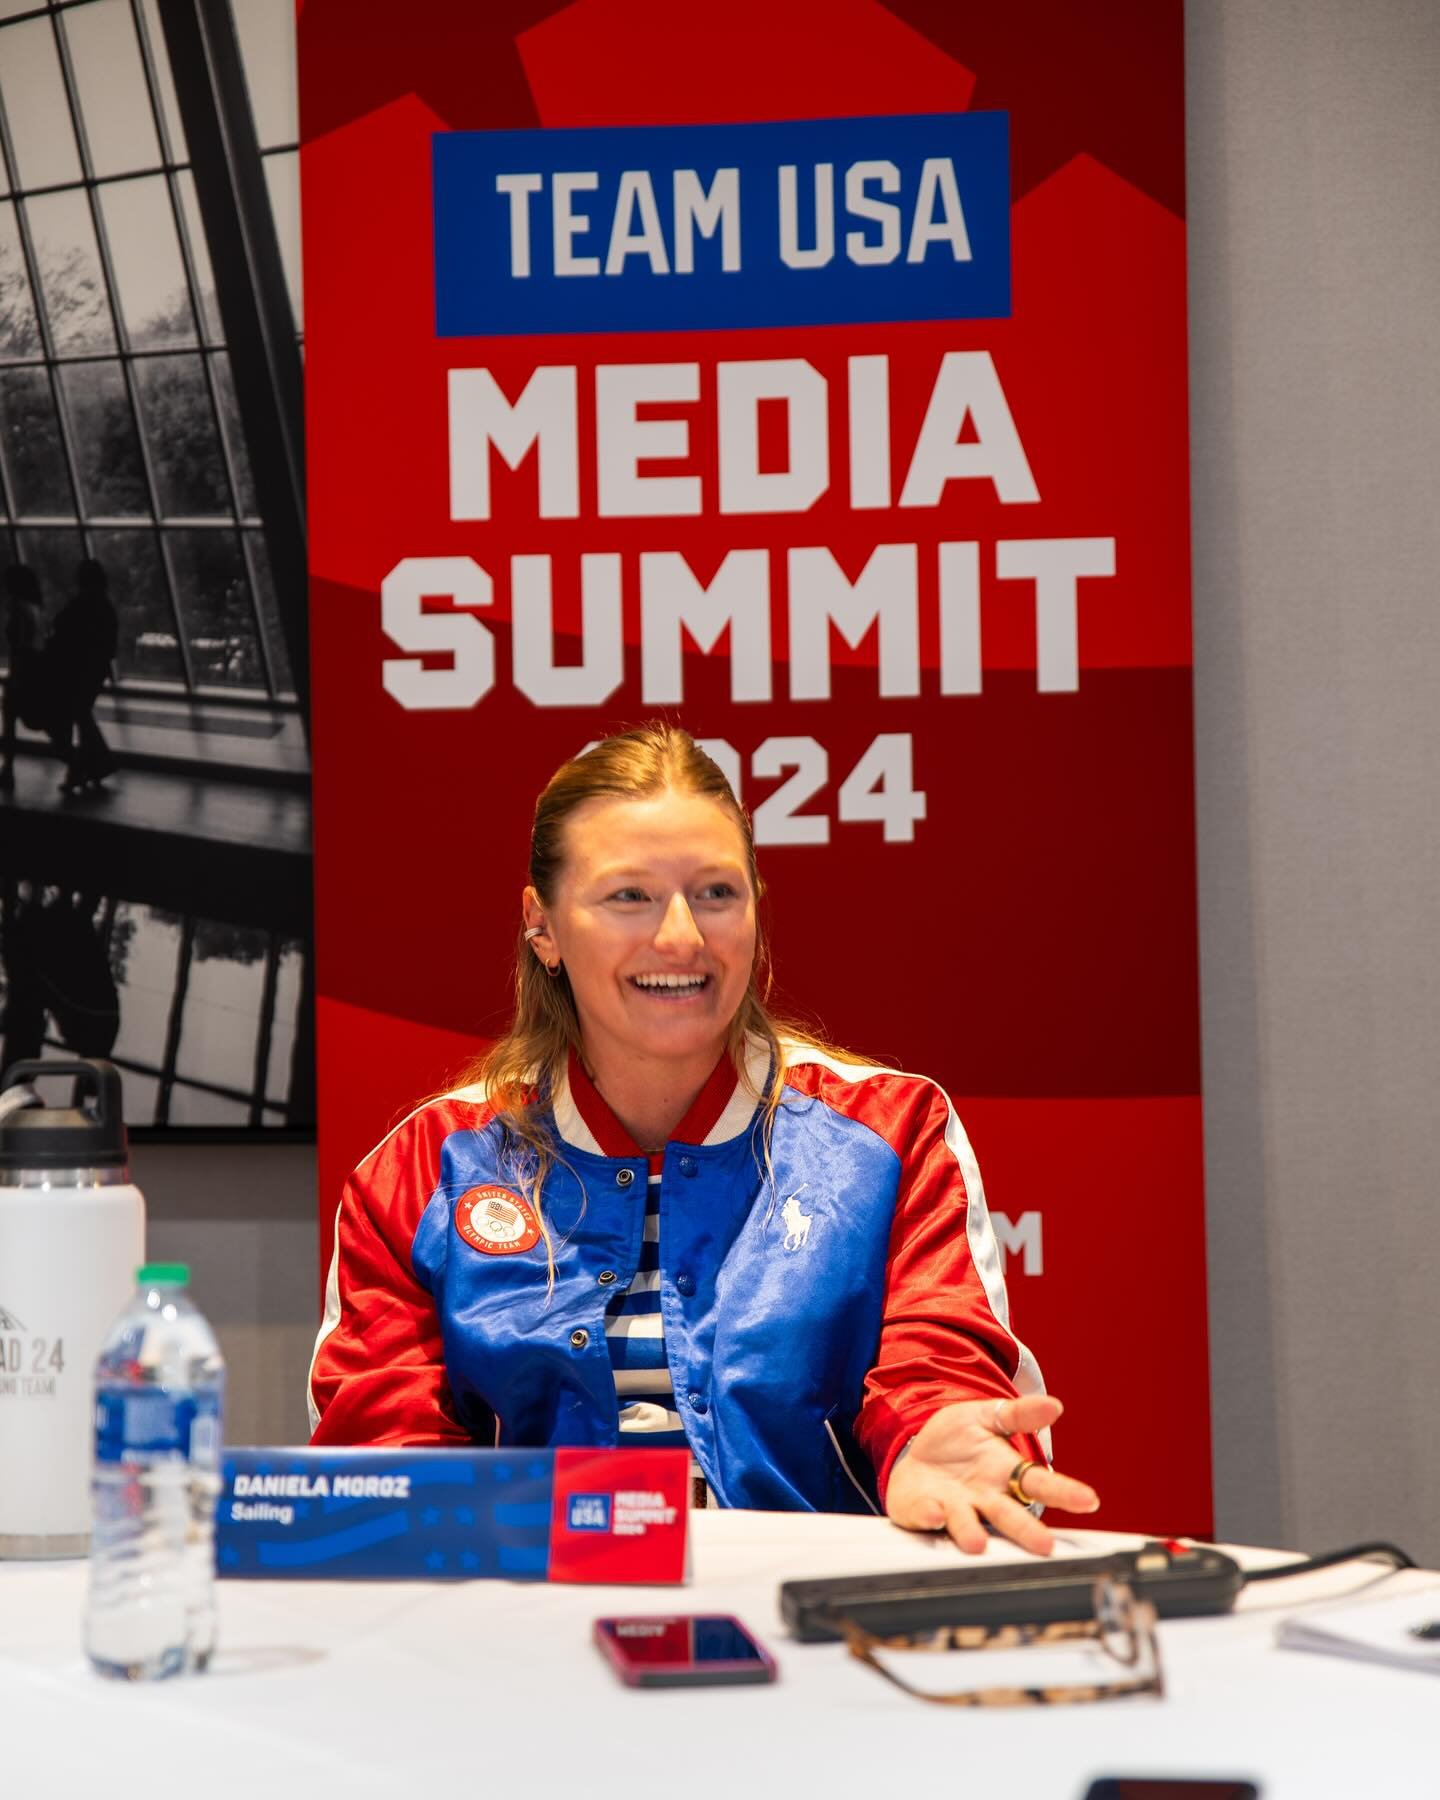 throwback to the @teamusa media summit in New York! 📷 @al.chenard